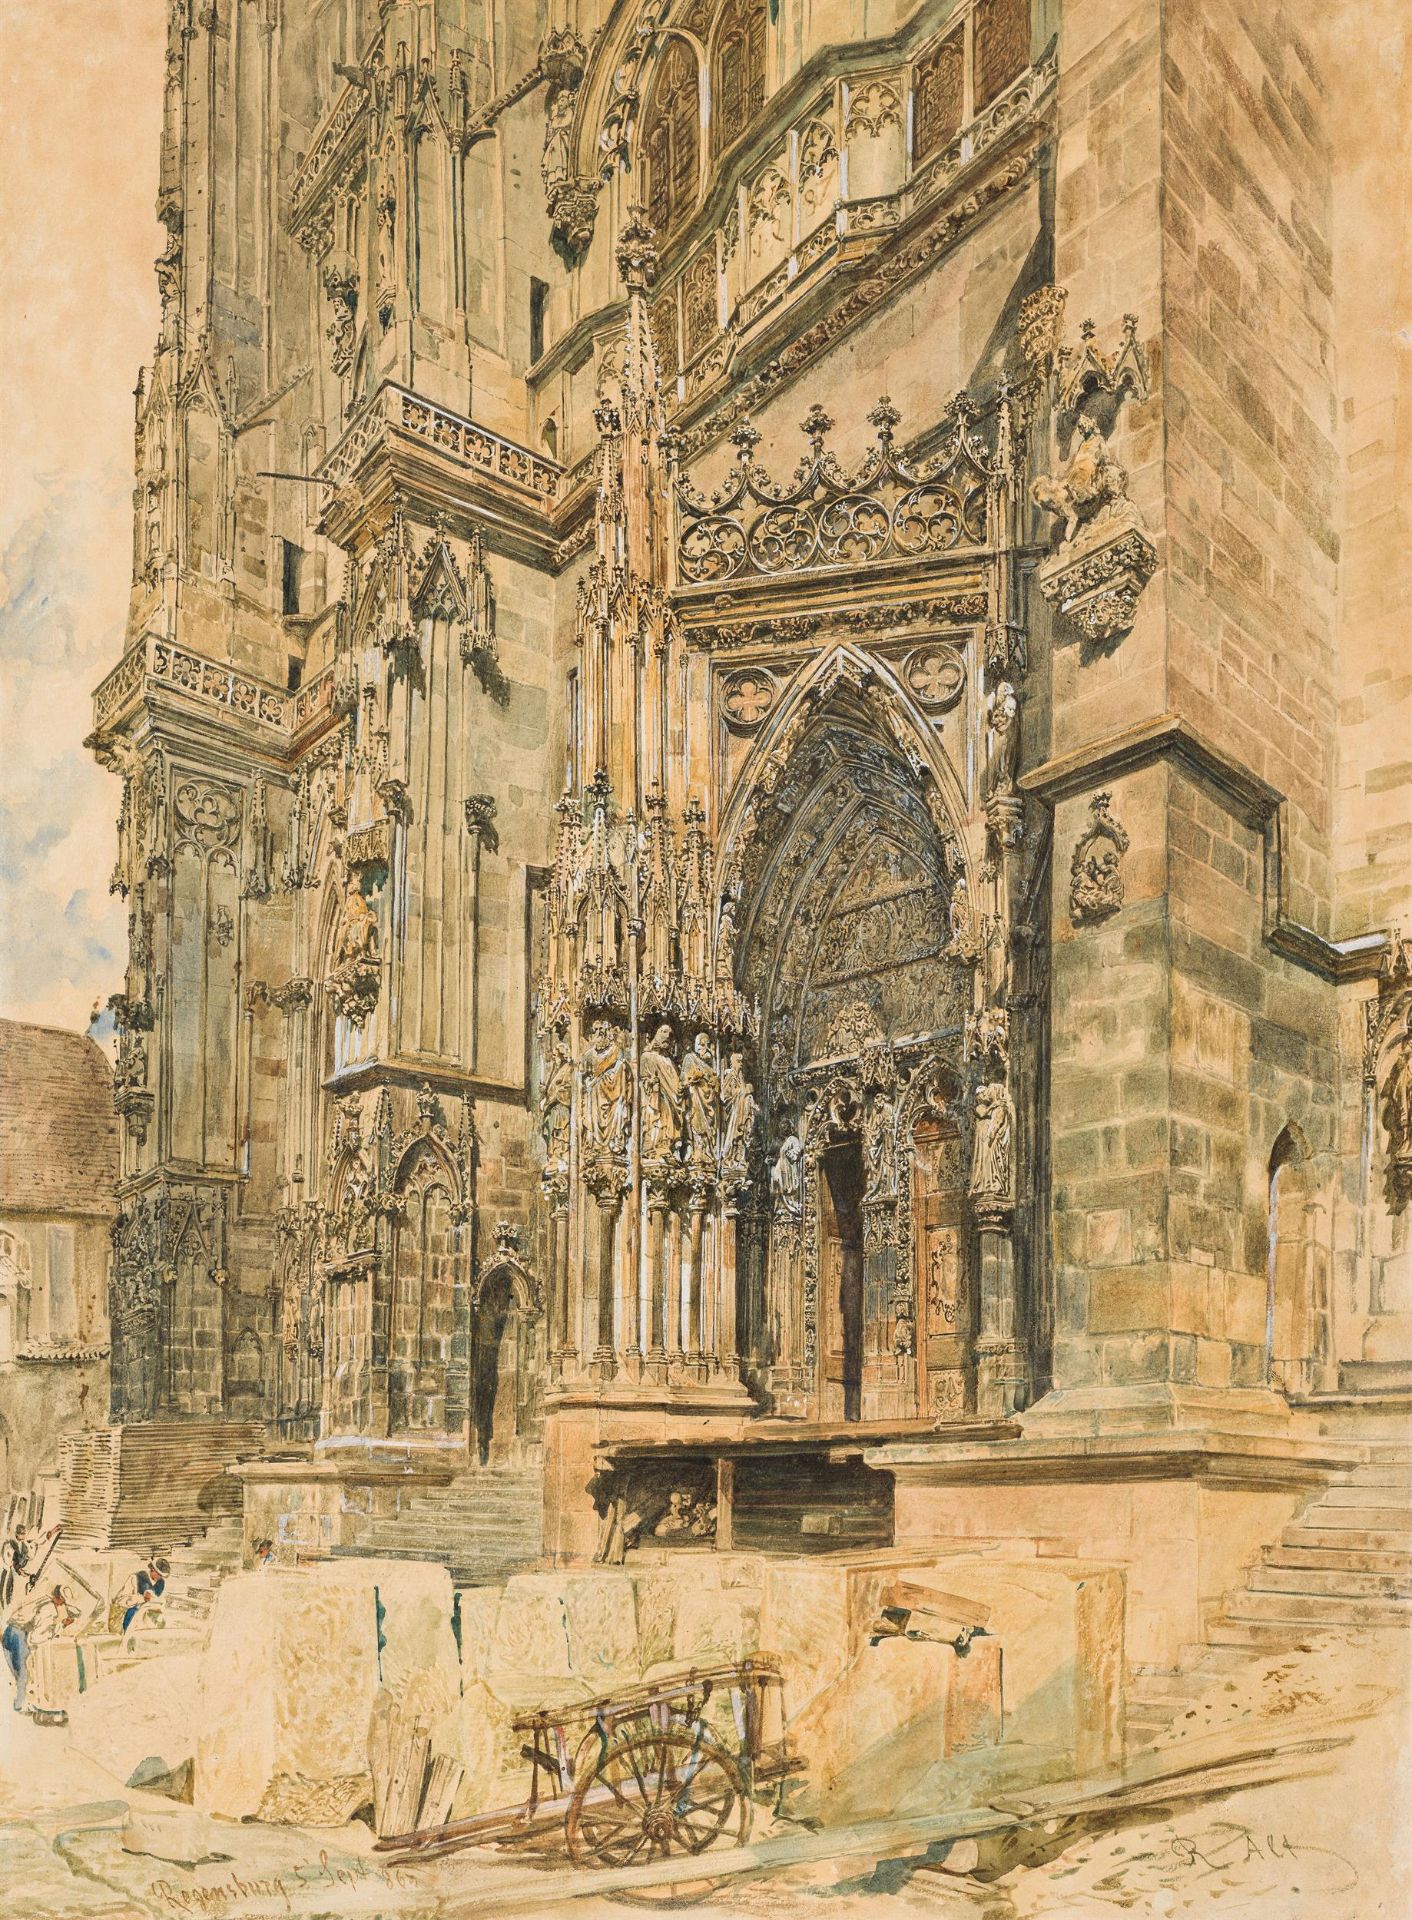 Rudolf von Alt: The portal of the cathedral in Regensburg